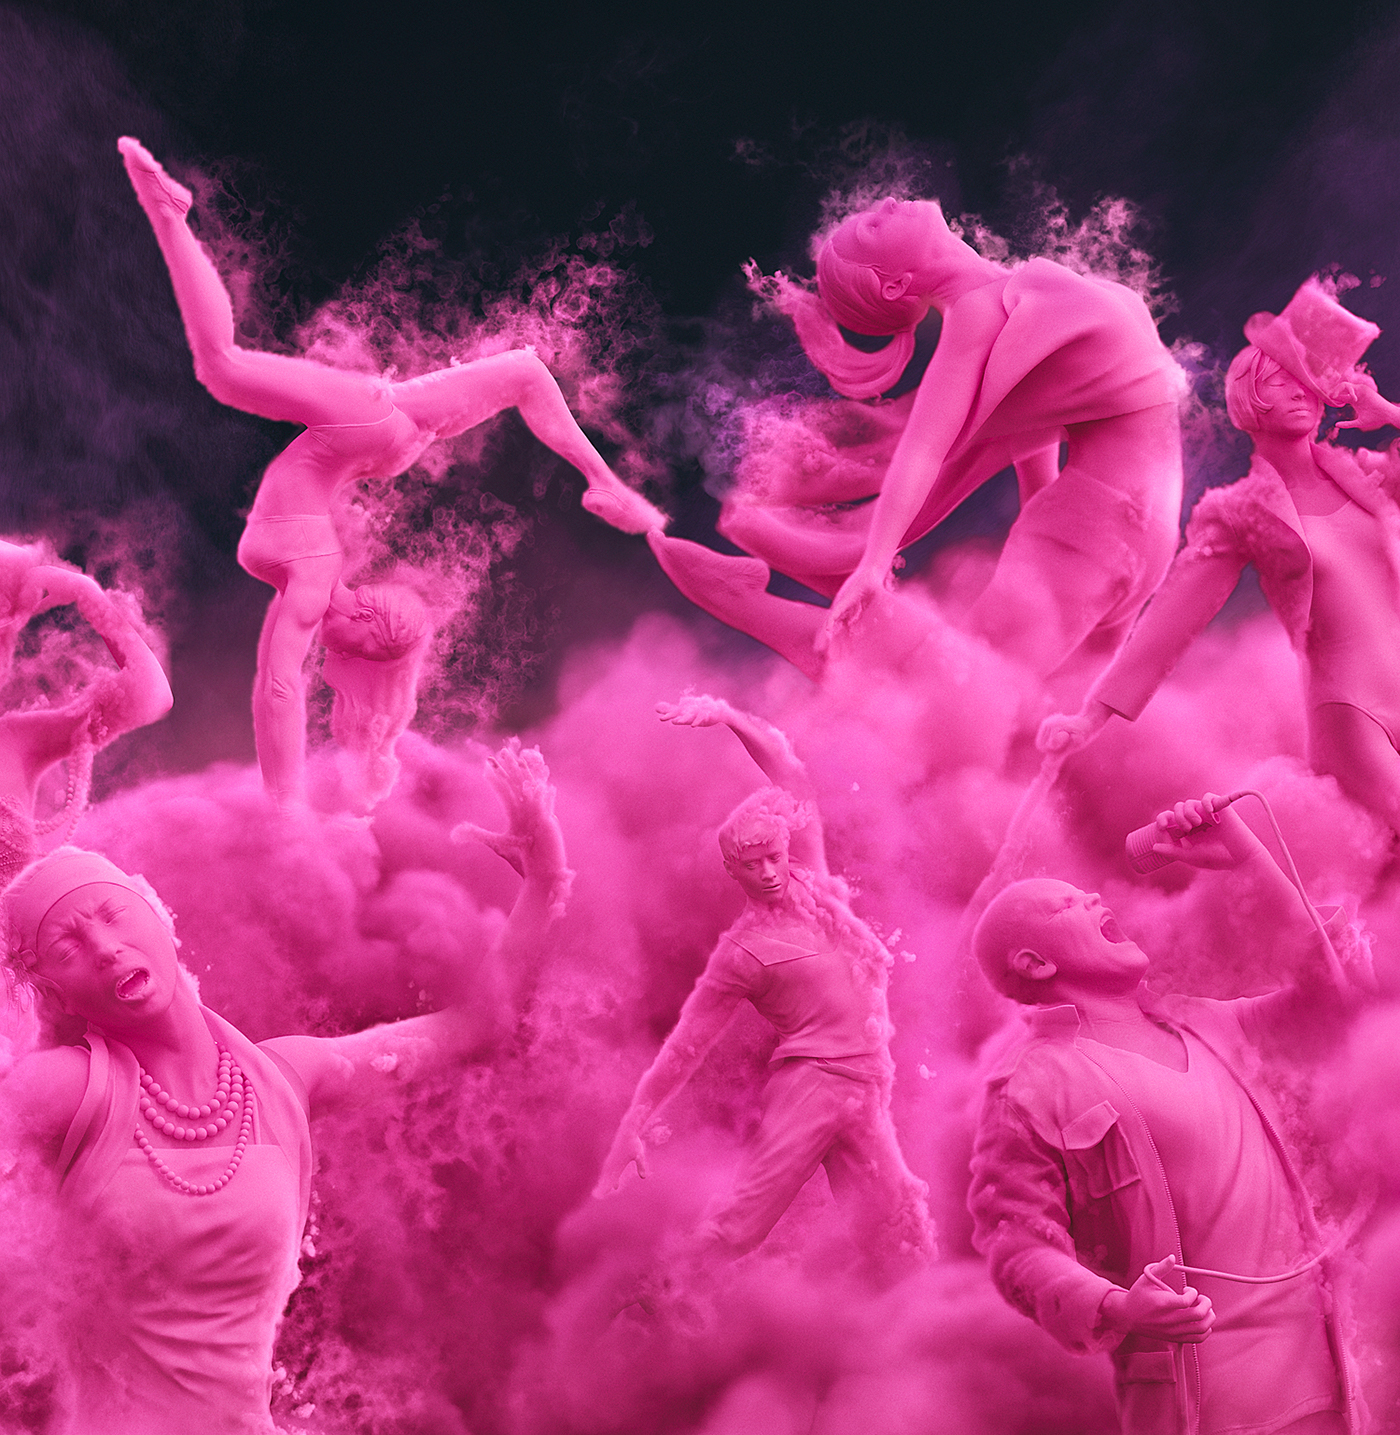 brisbane festival smoke Performers dancer dj musician festival cgi modelling Character design  pink